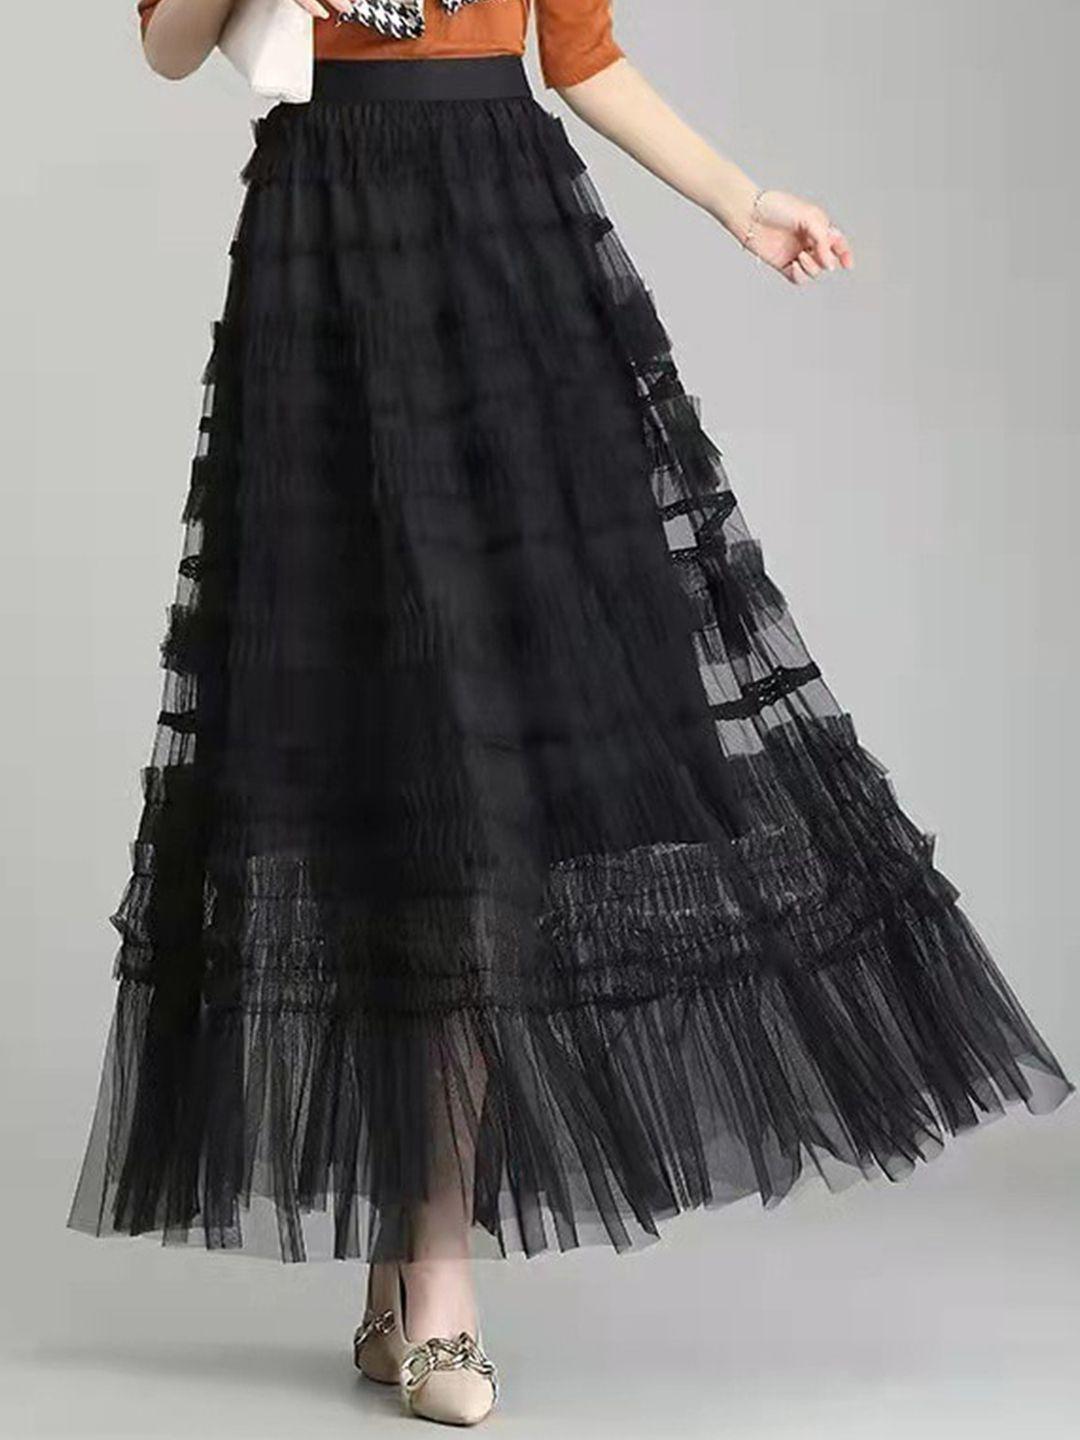 stylecast black frills and ruffles flared maxi skirt